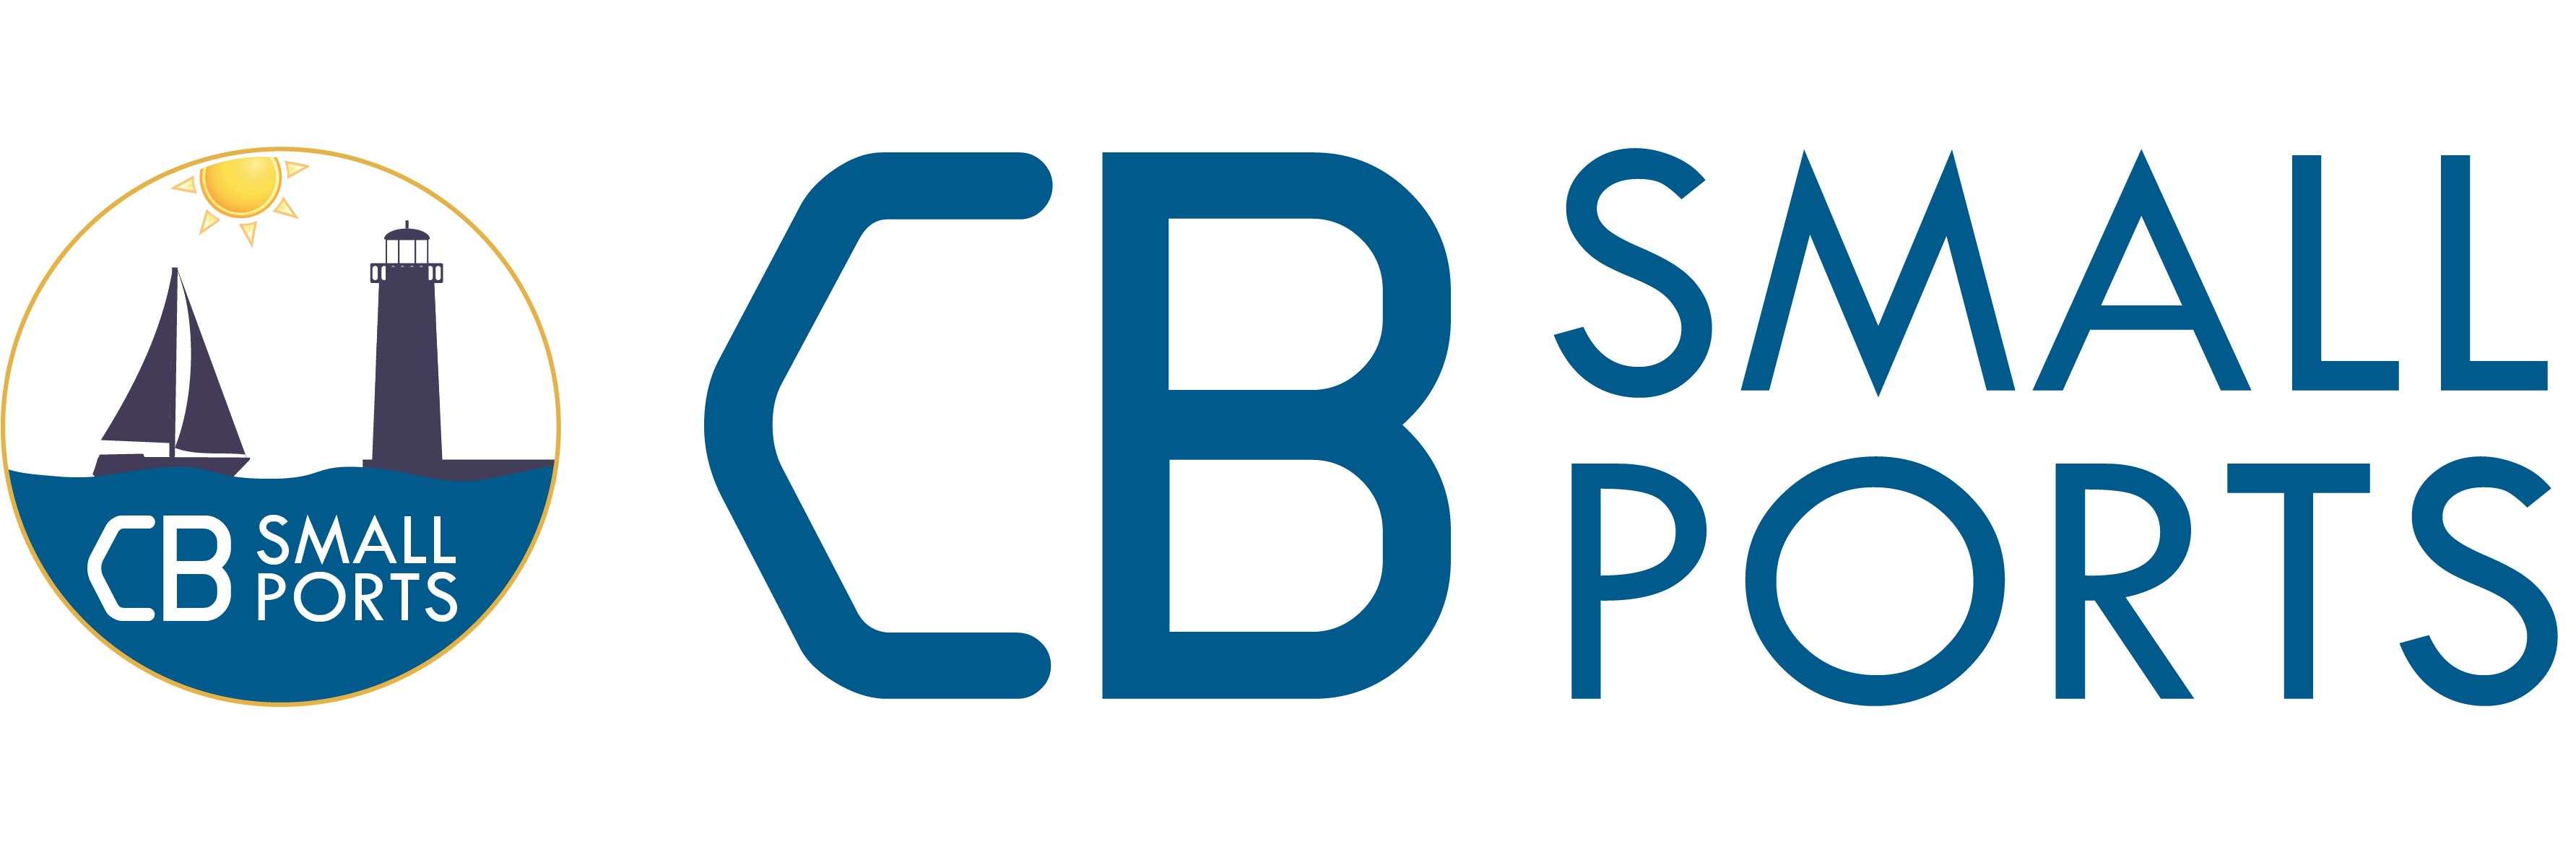 CB Small ports Logo.